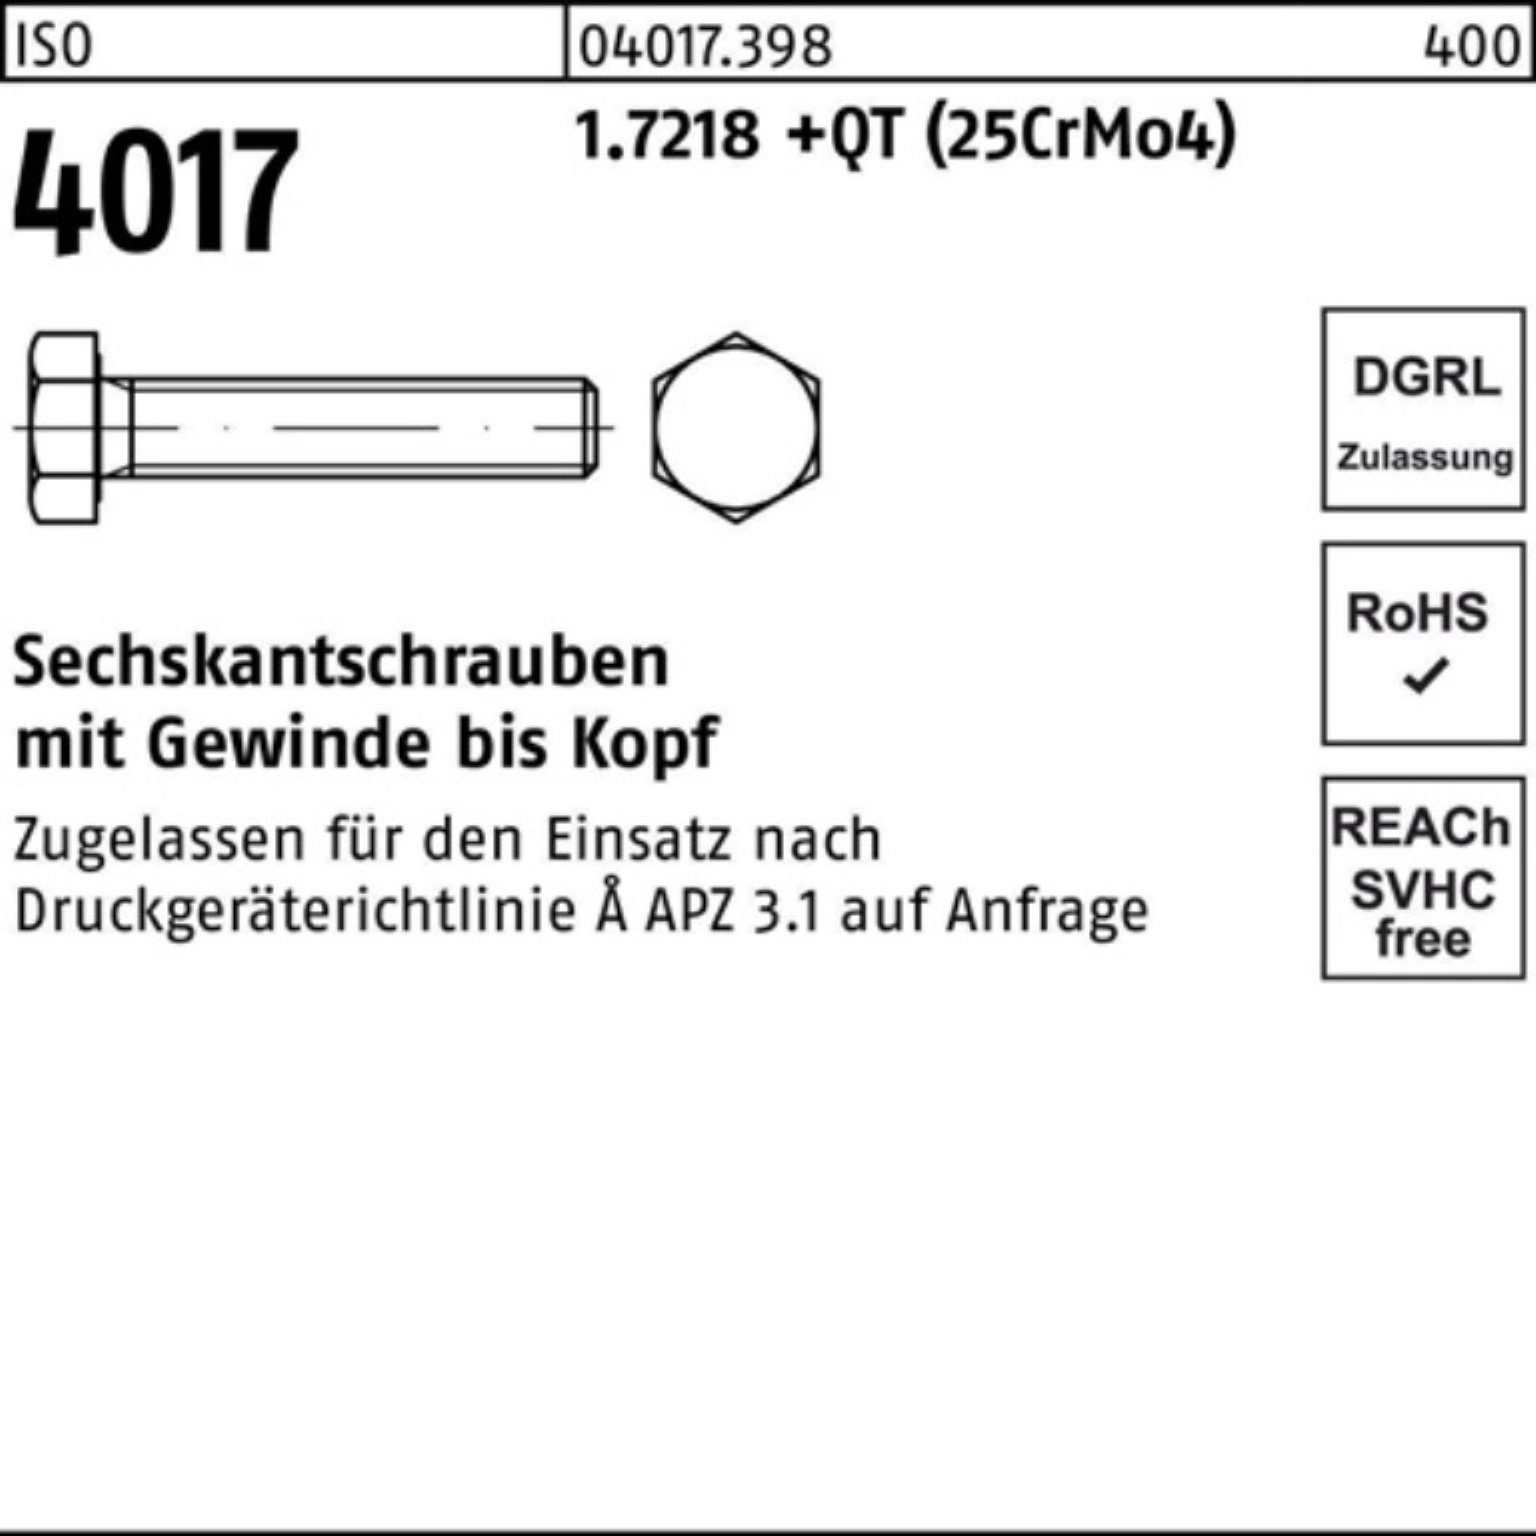 +QT 1.7218 Bufab Pack M20x 30 Sechskantschraube 4017 Sechskantschraube (25CrMo4) 100er ISO VG